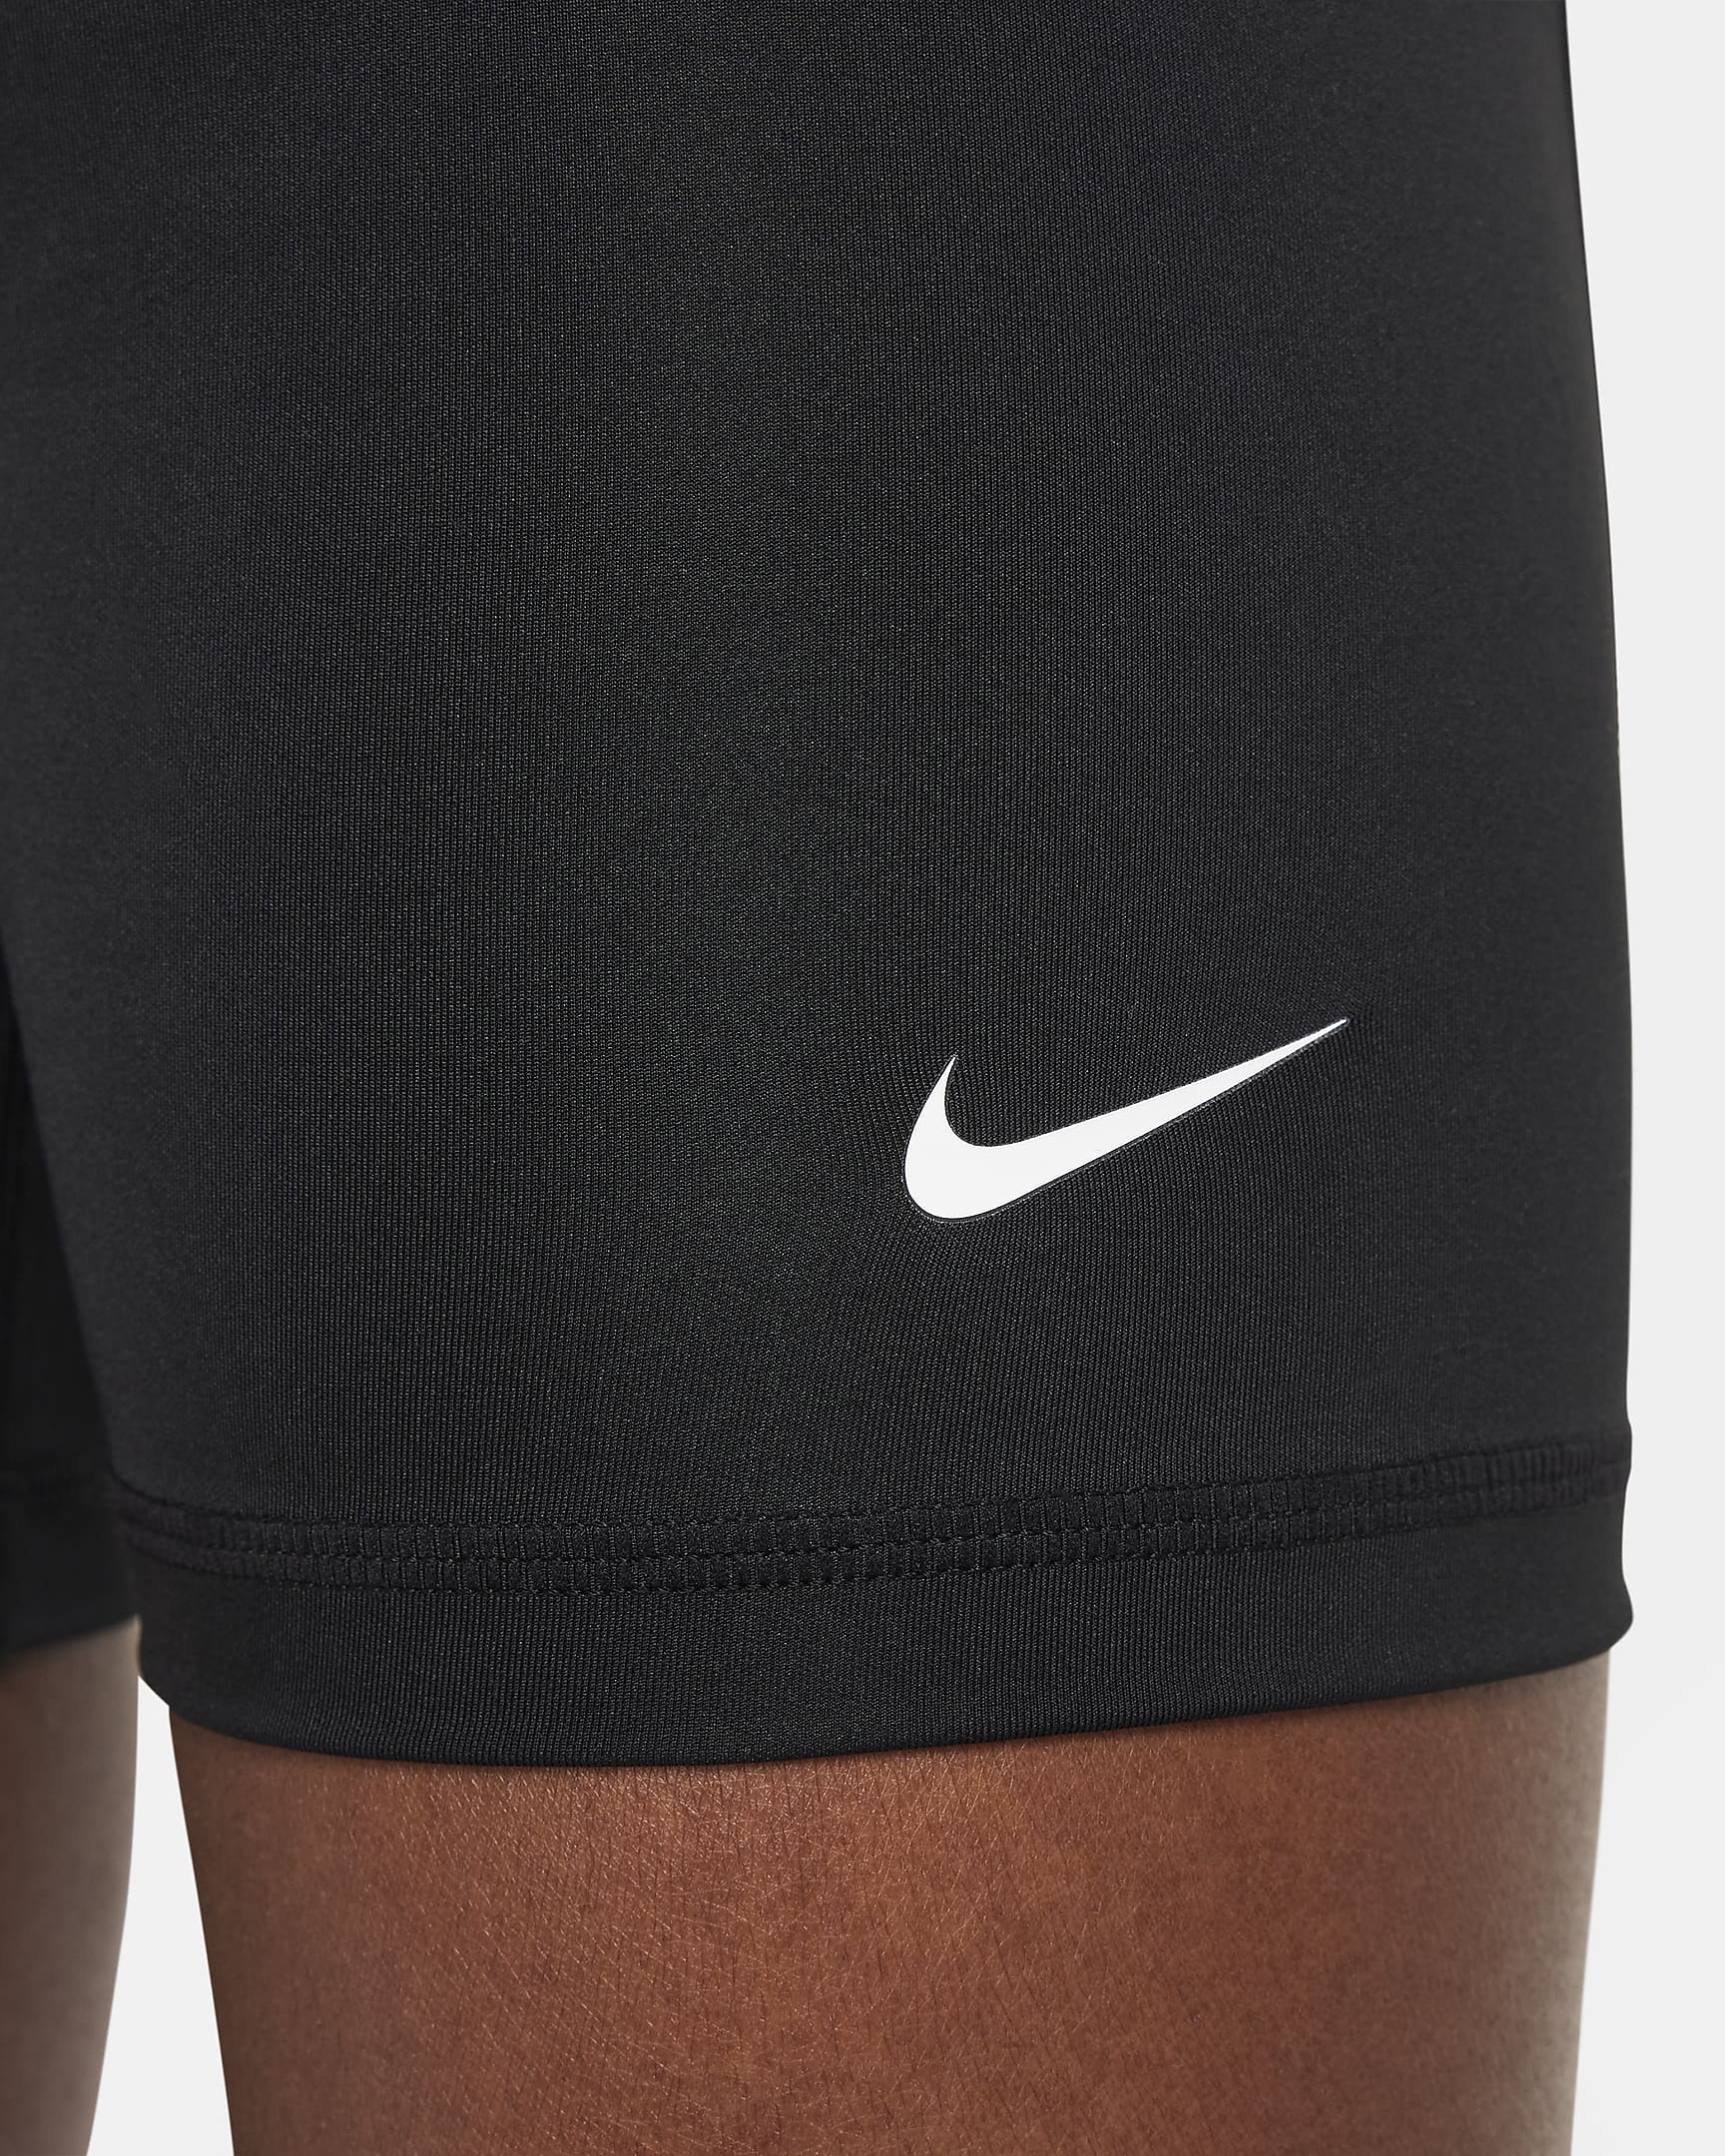 Short Nike Pro pour ado (fille) - Noir/Blanc